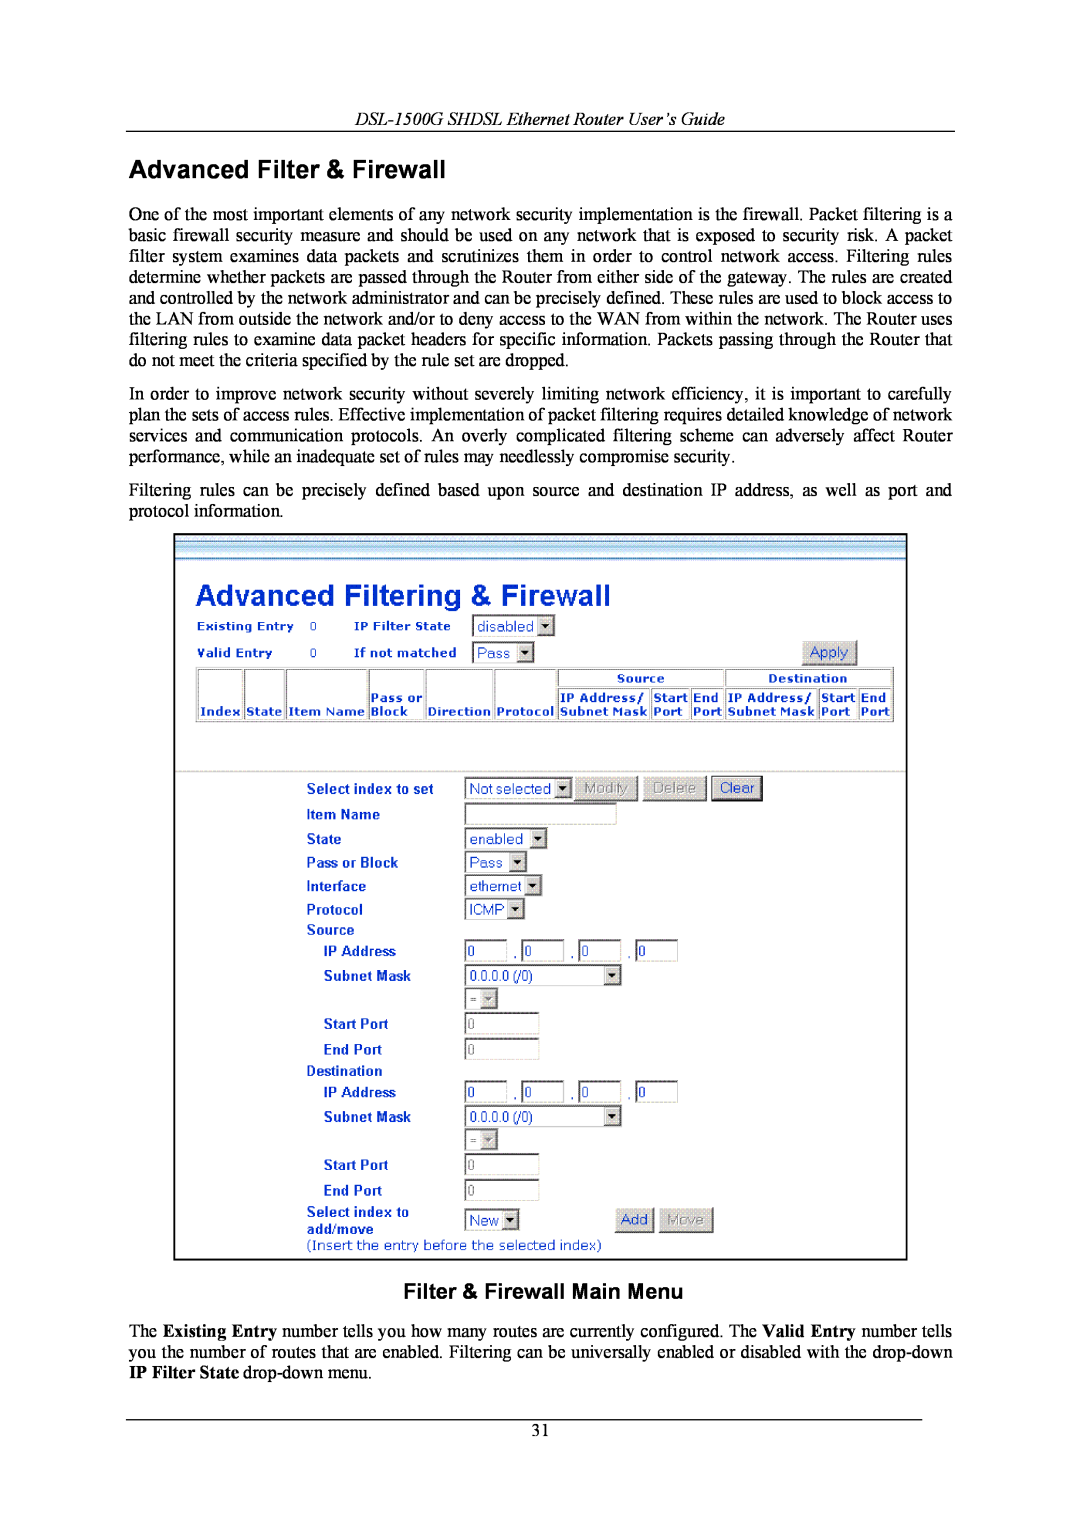 D-Link manual Advanced Filter & Firewall, Filter & Firewall Main Menu, DSL-1500G SHDSL Ethernet Router User’s Guide 